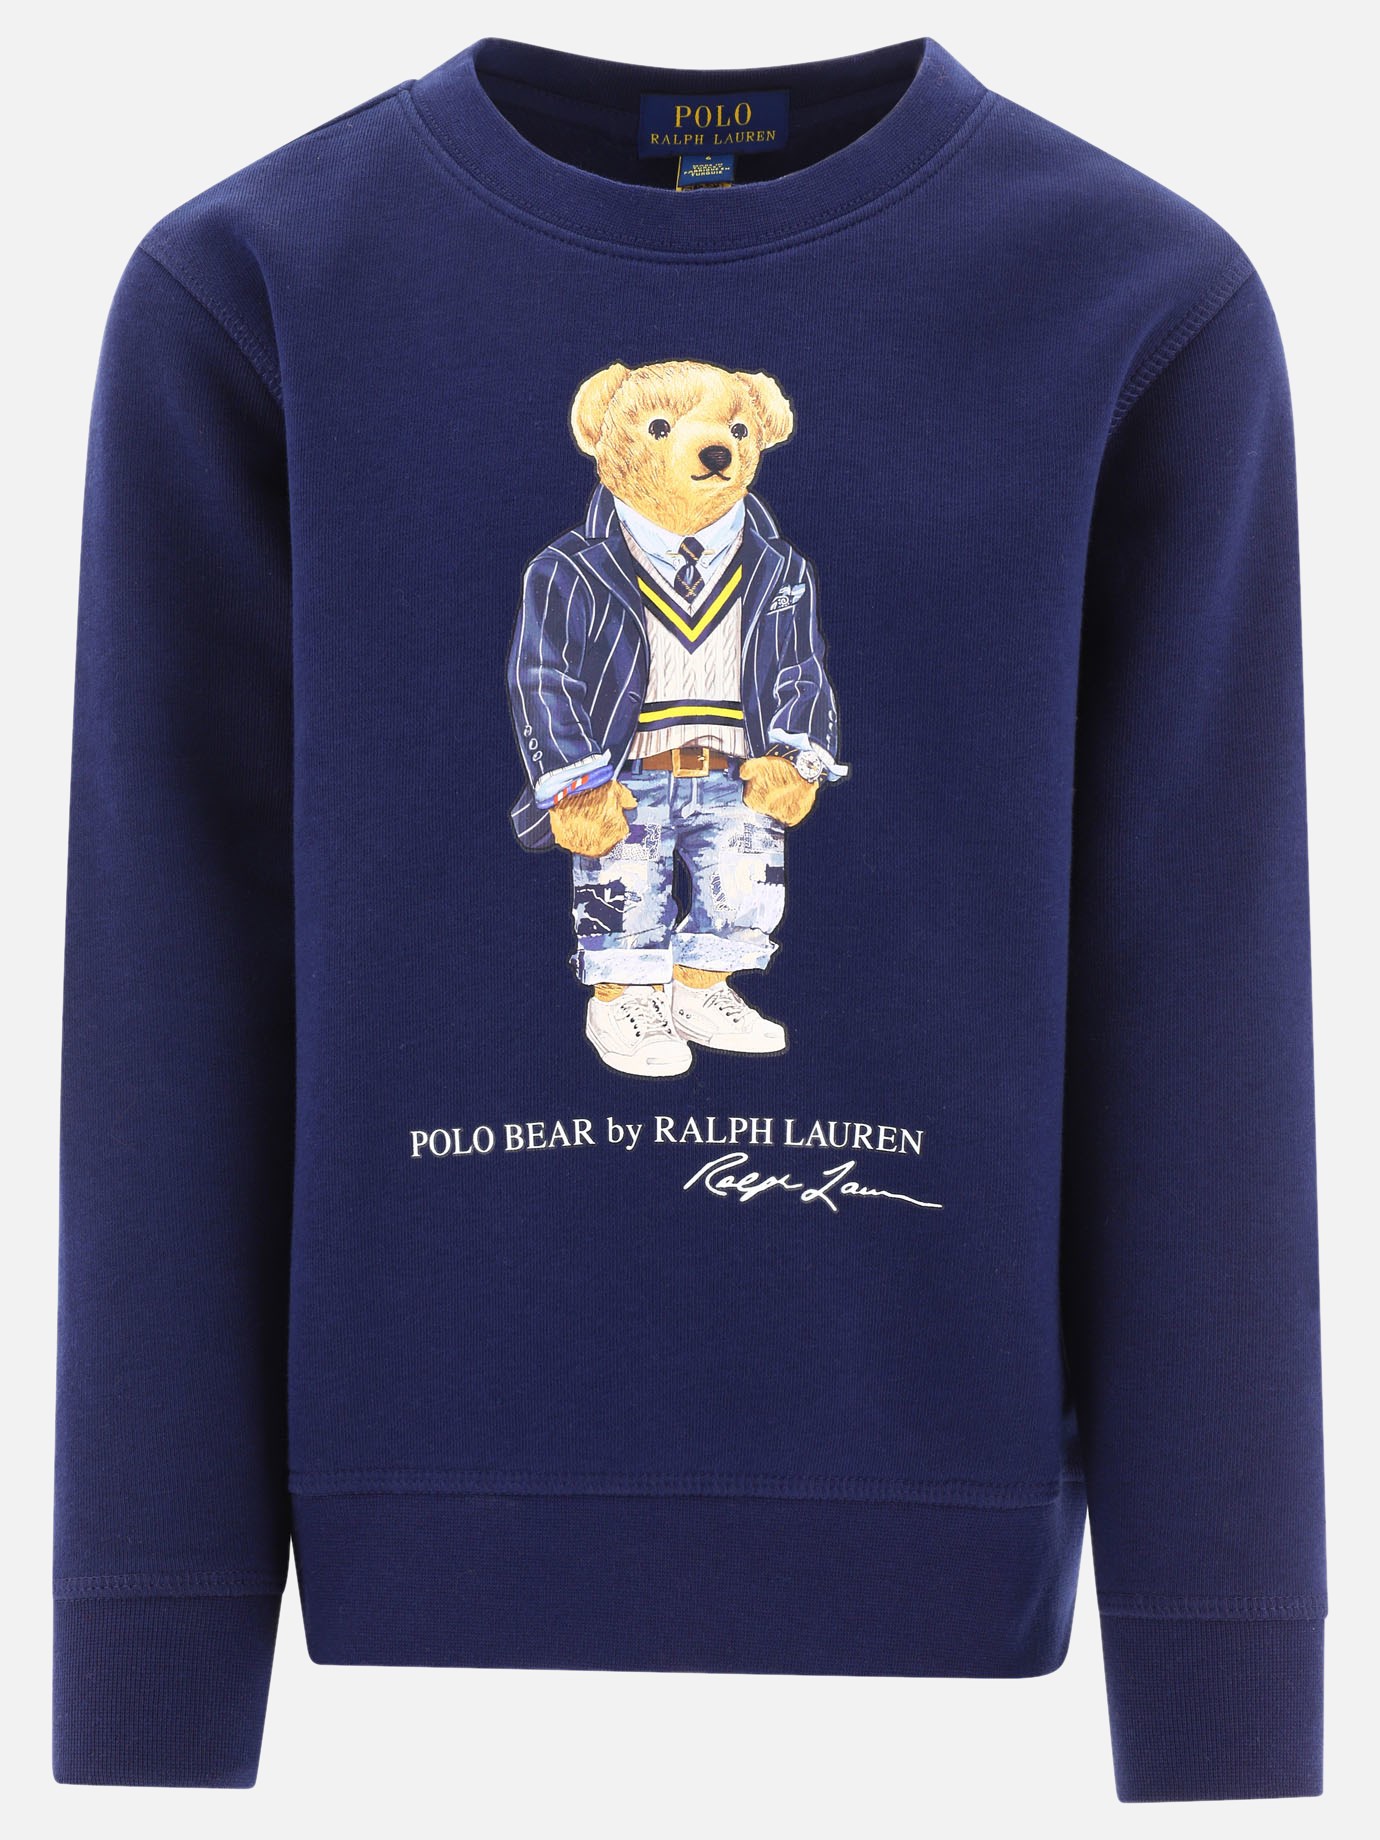  Polo Bear  sweatshirtby Ralph Lauren Kids - 5